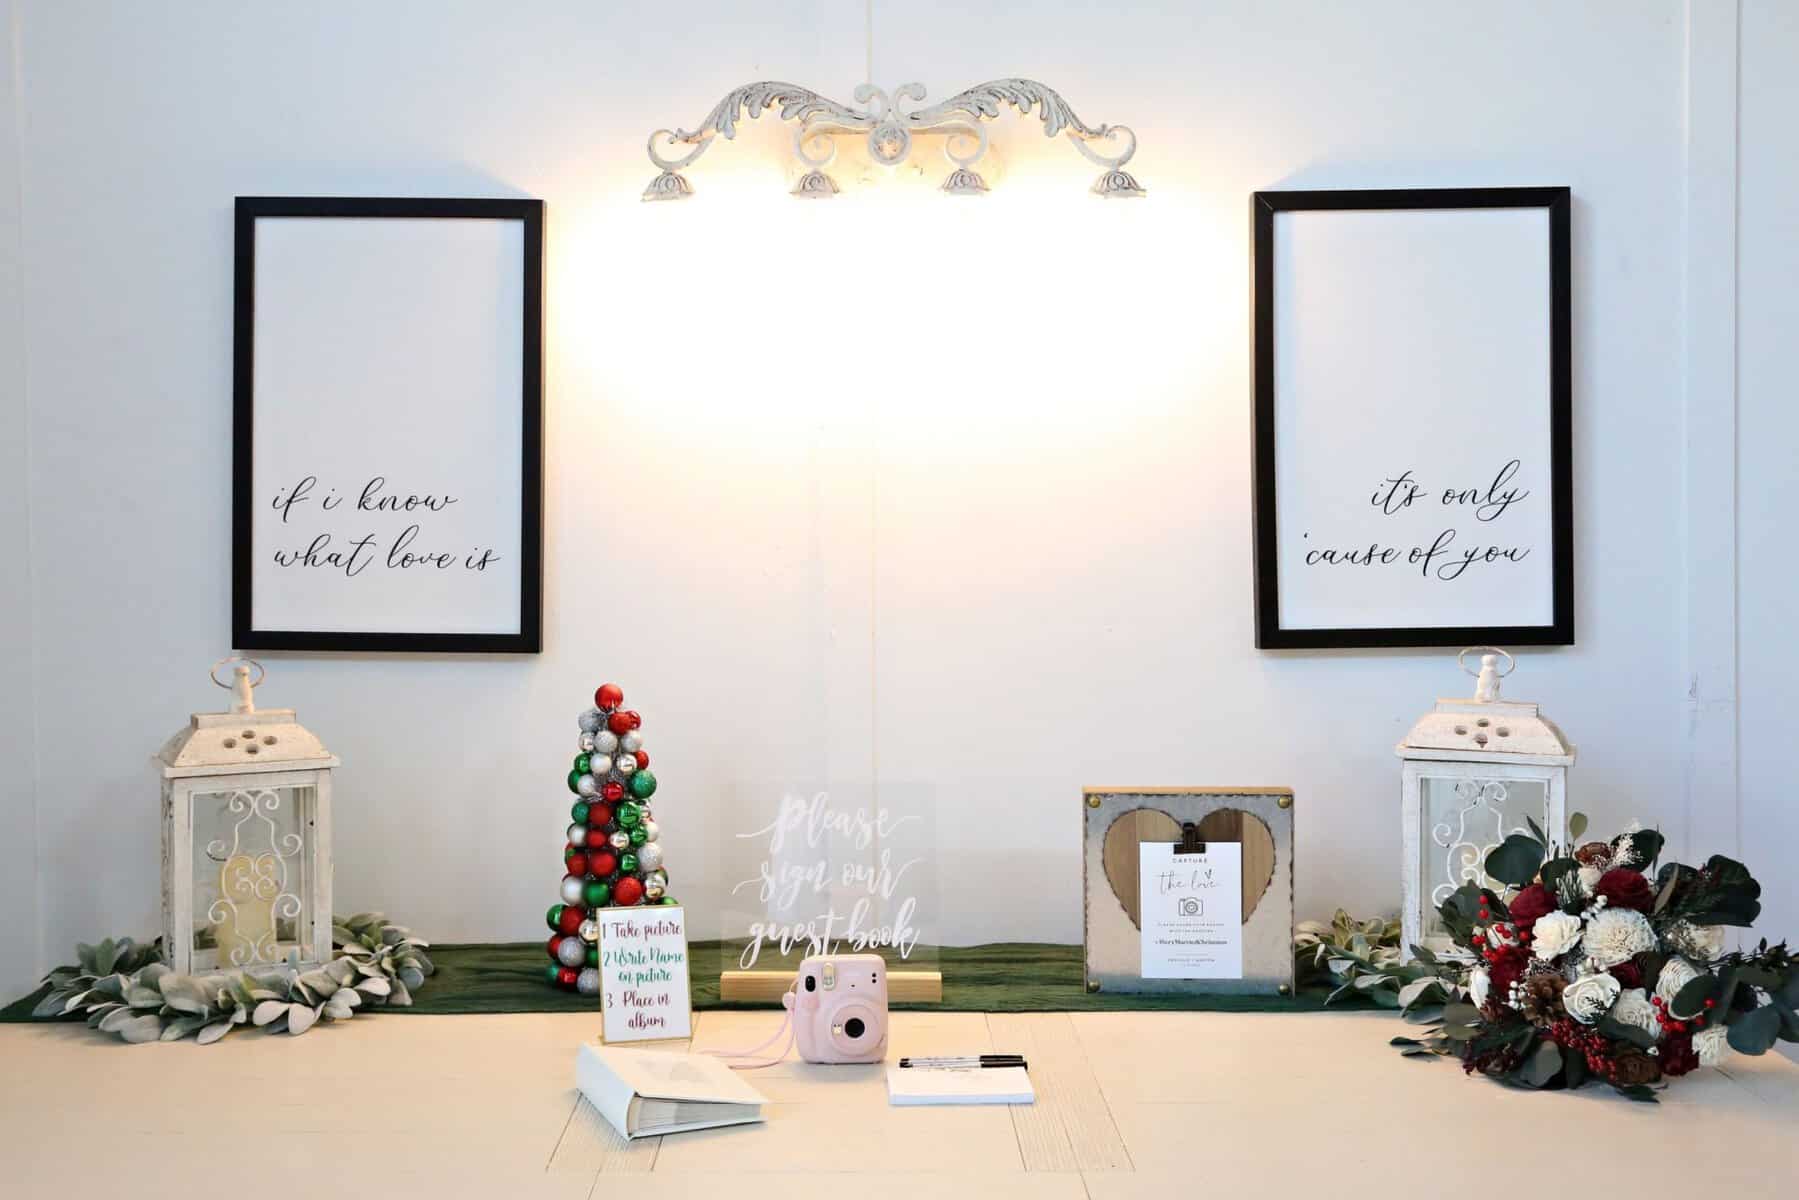 Christmas Wedding Theme - Just Marry Weddings - Regina Hyman Photography - Details - Decor